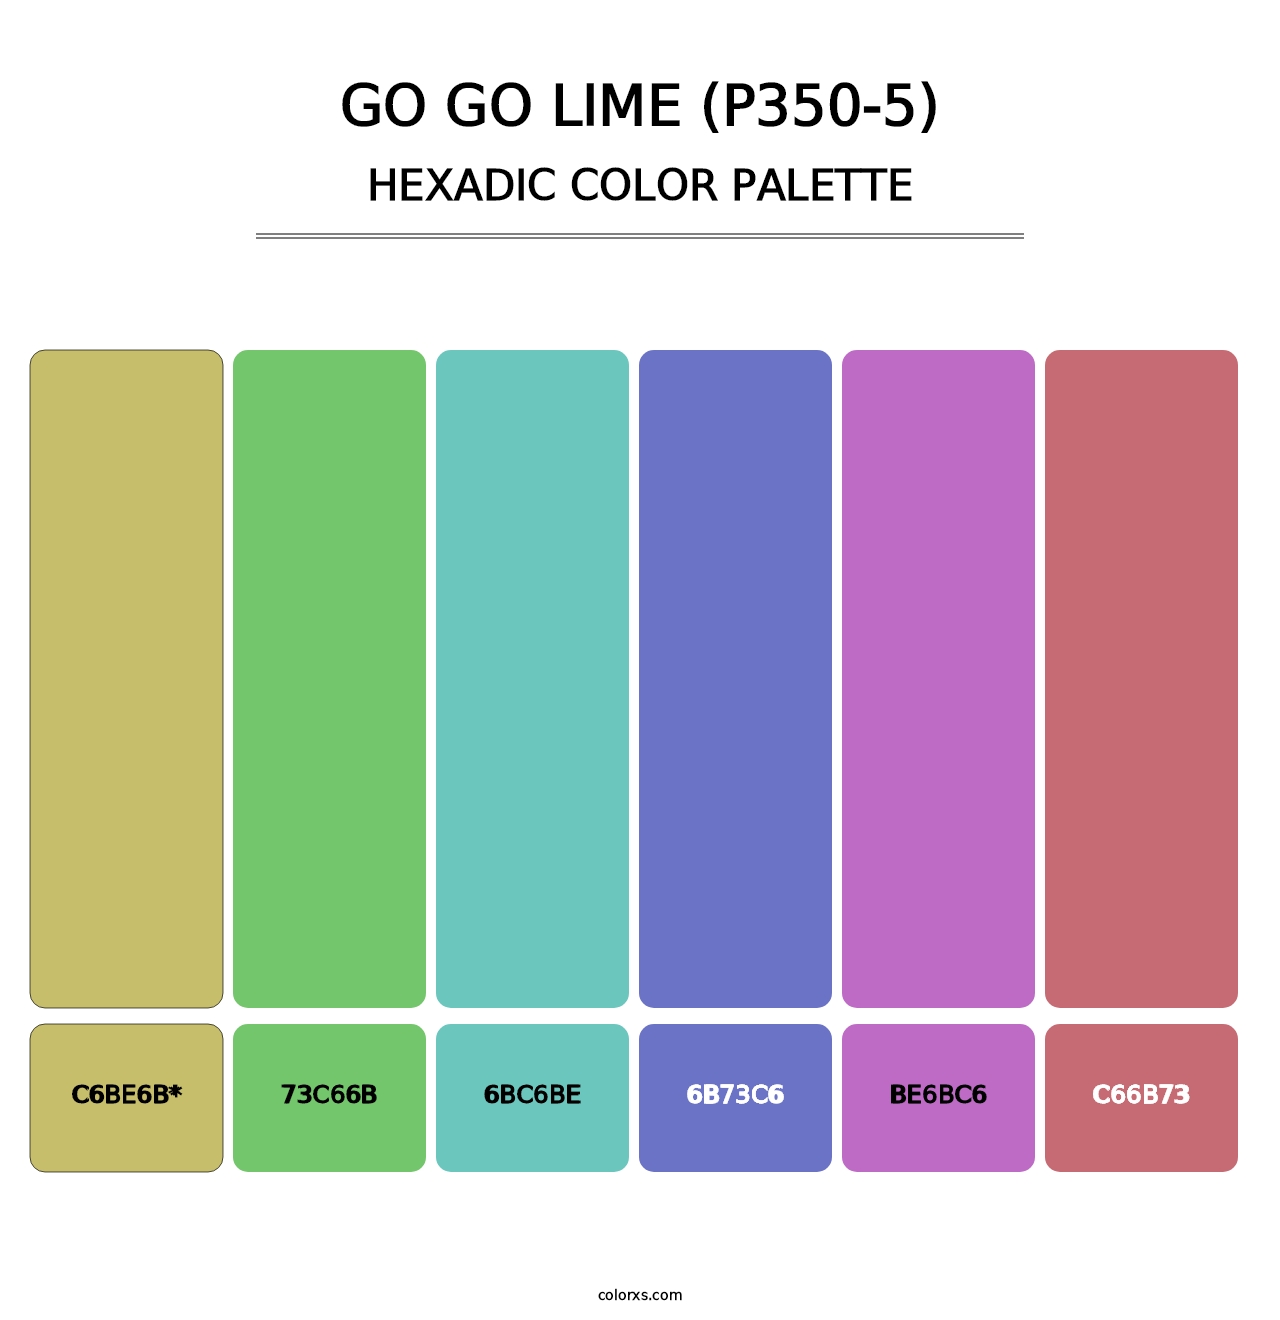 Go Go Lime (P350-5) - Hexadic Color Palette